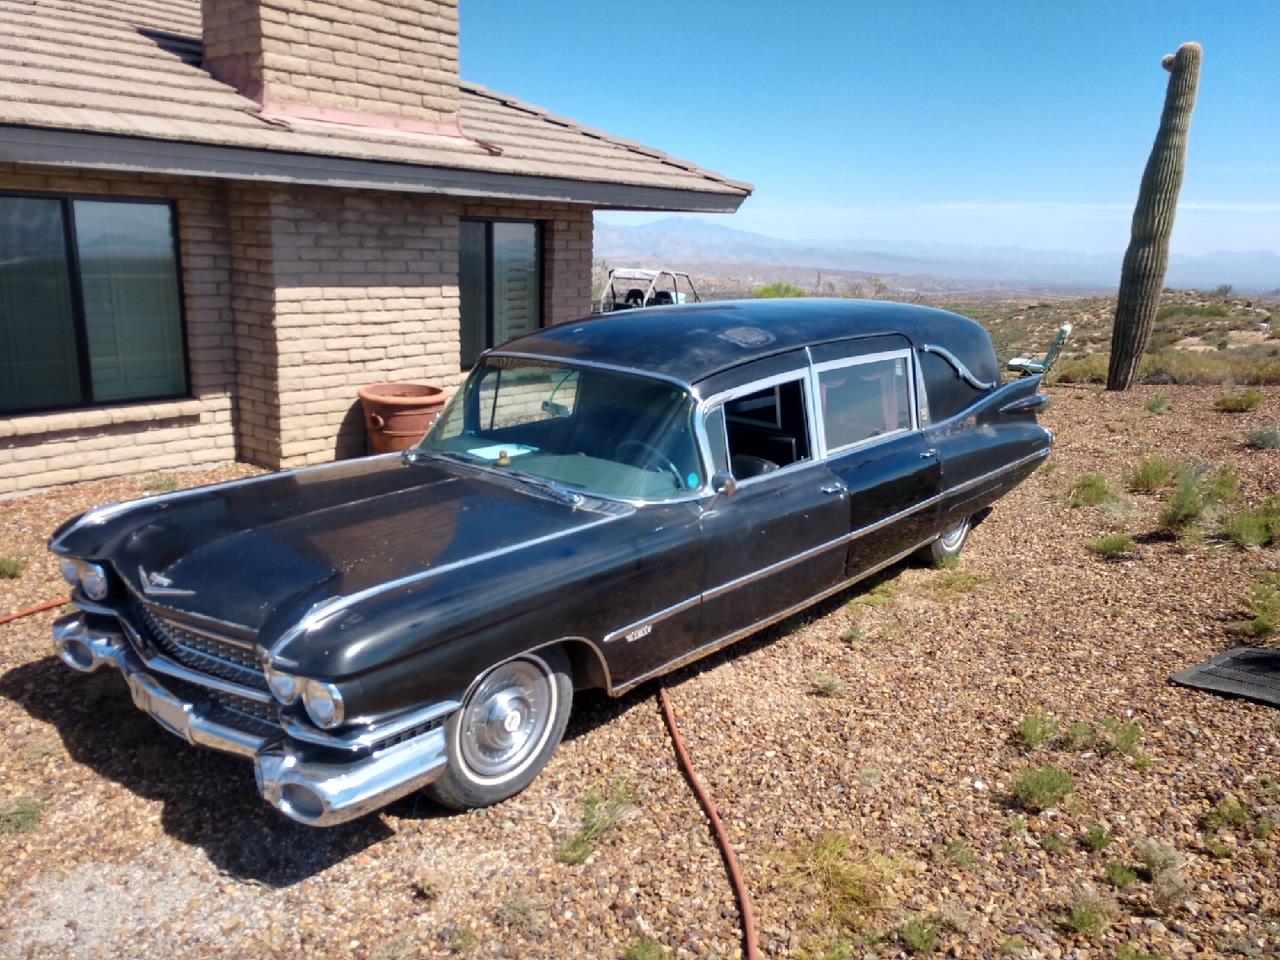 For Sale: 1959 Cadillac Hearse in Scottsdale, Arizona.